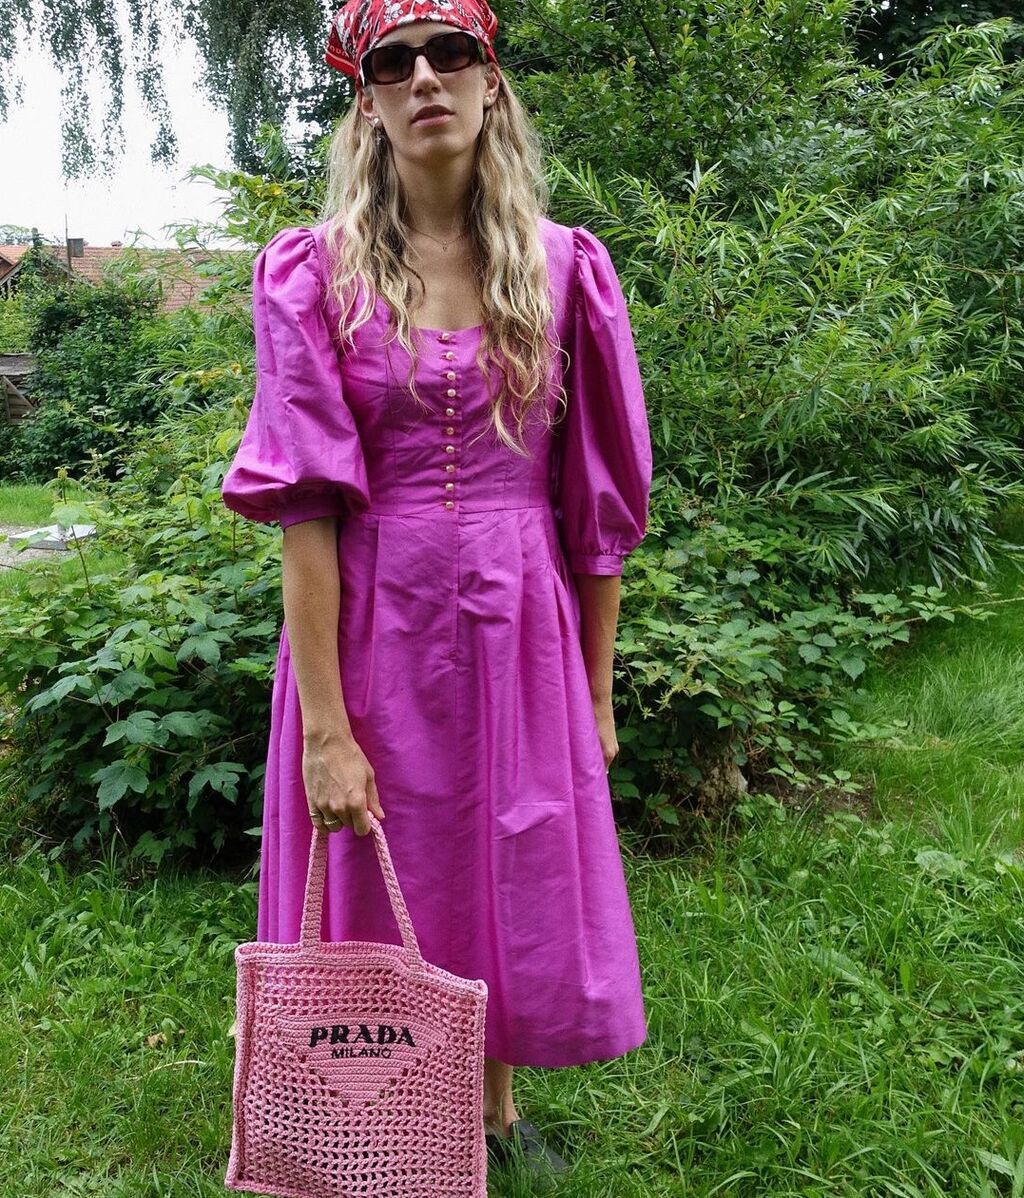 Veronika Heilbrunner con el bolso rosa